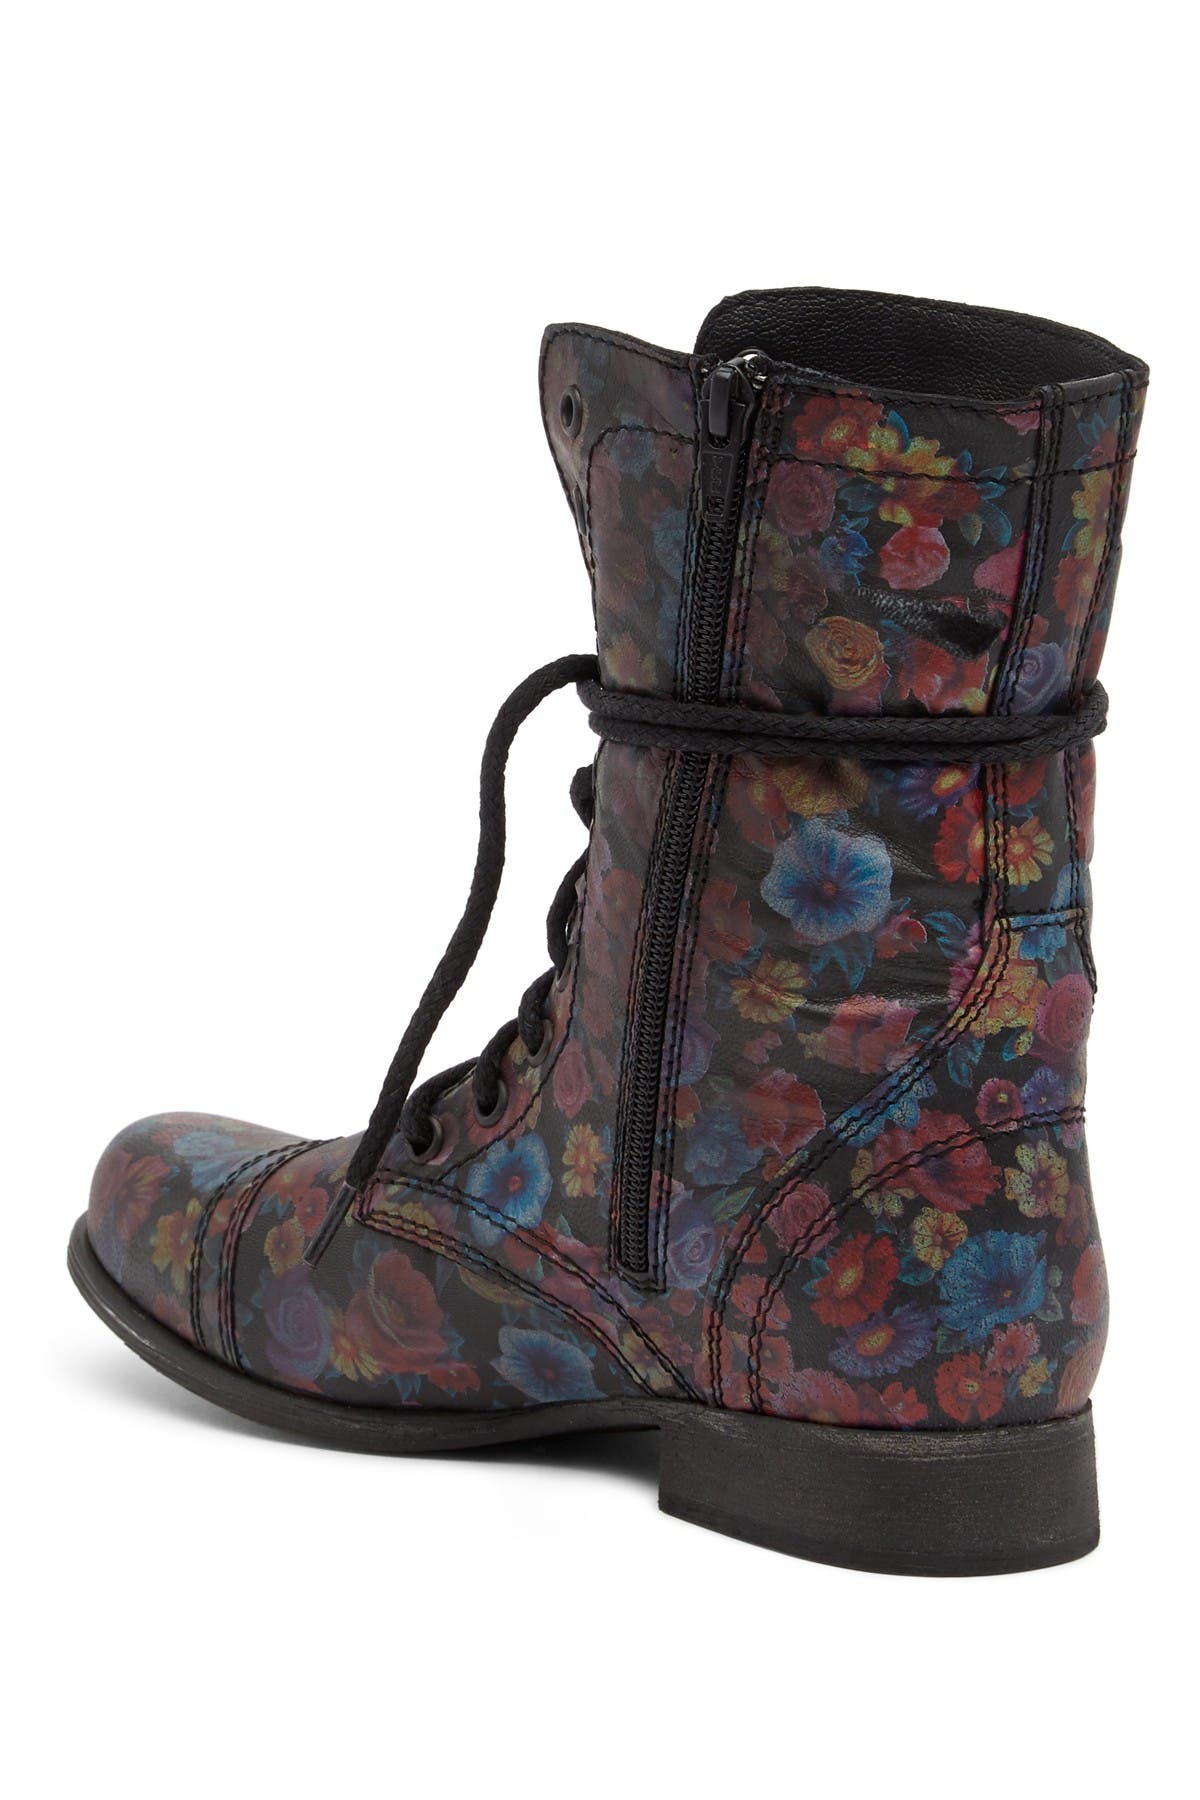 steve madden floral boots